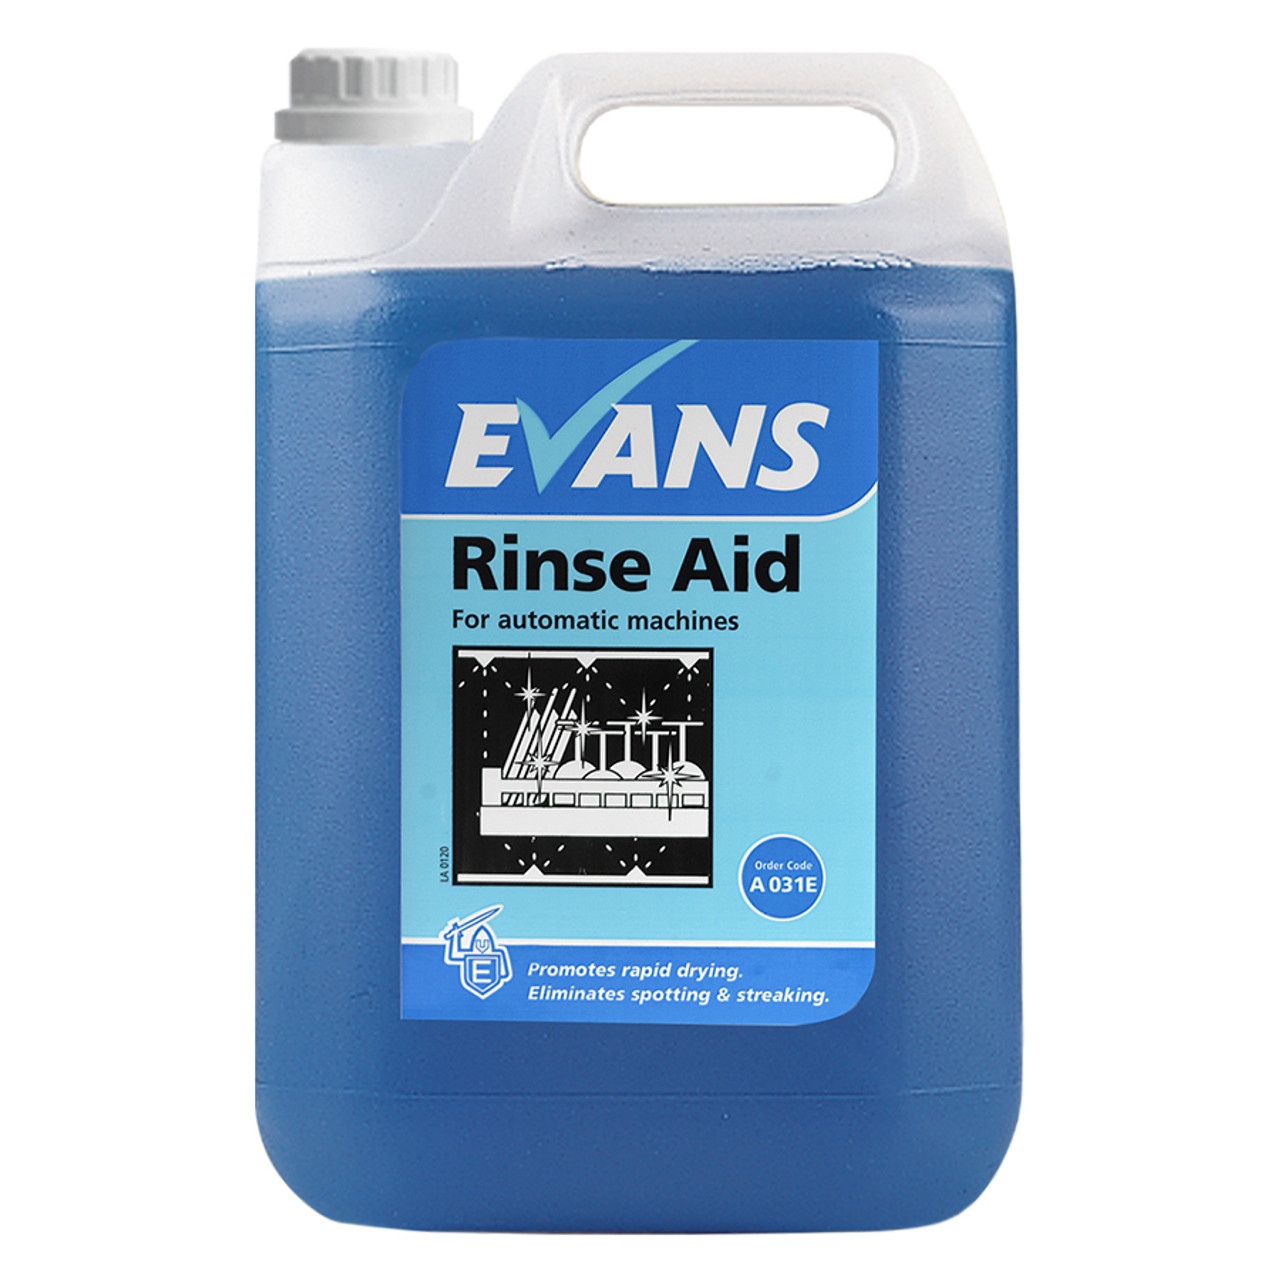 EVANS RINSE AID 5L